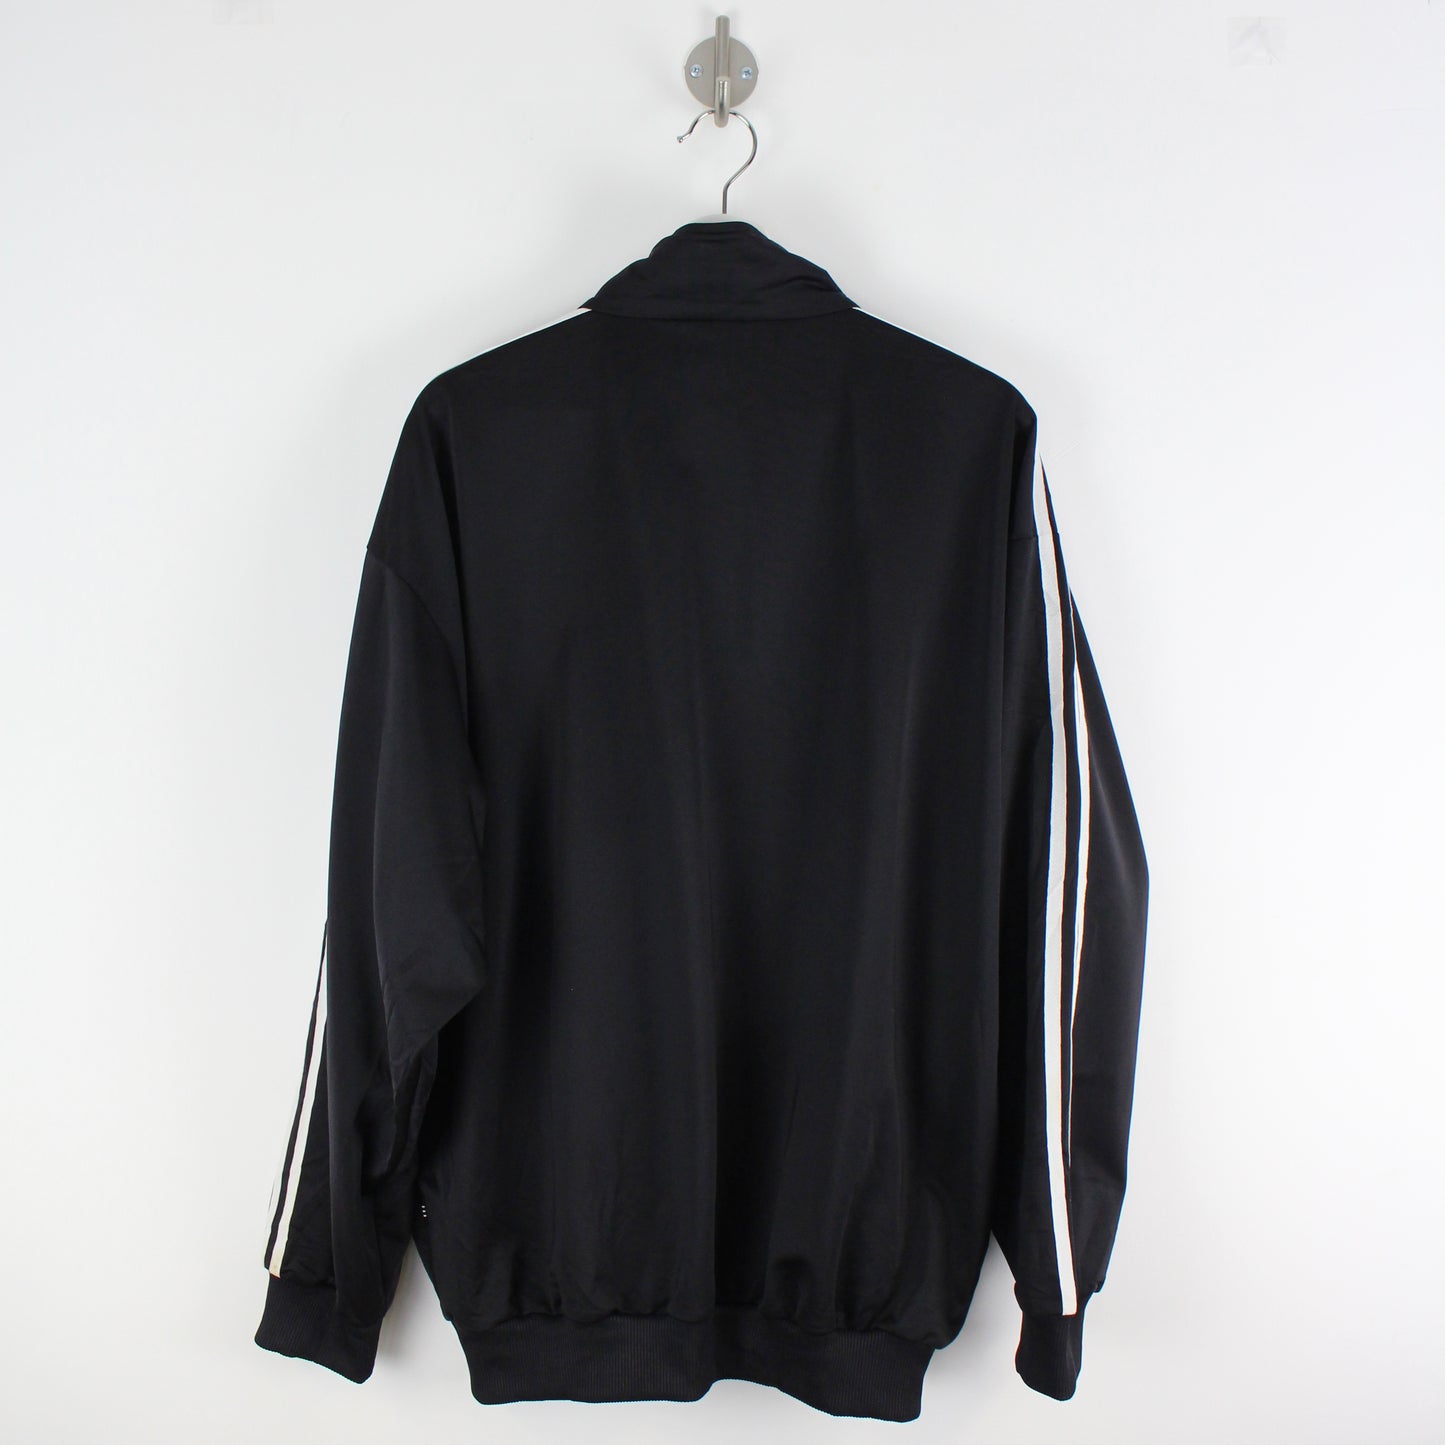 90s Adidas Black Track Jacket (XL)